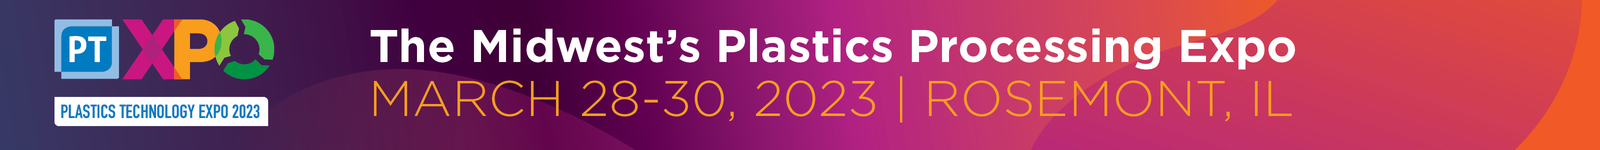 Plastics Technology Expo 2023 logo